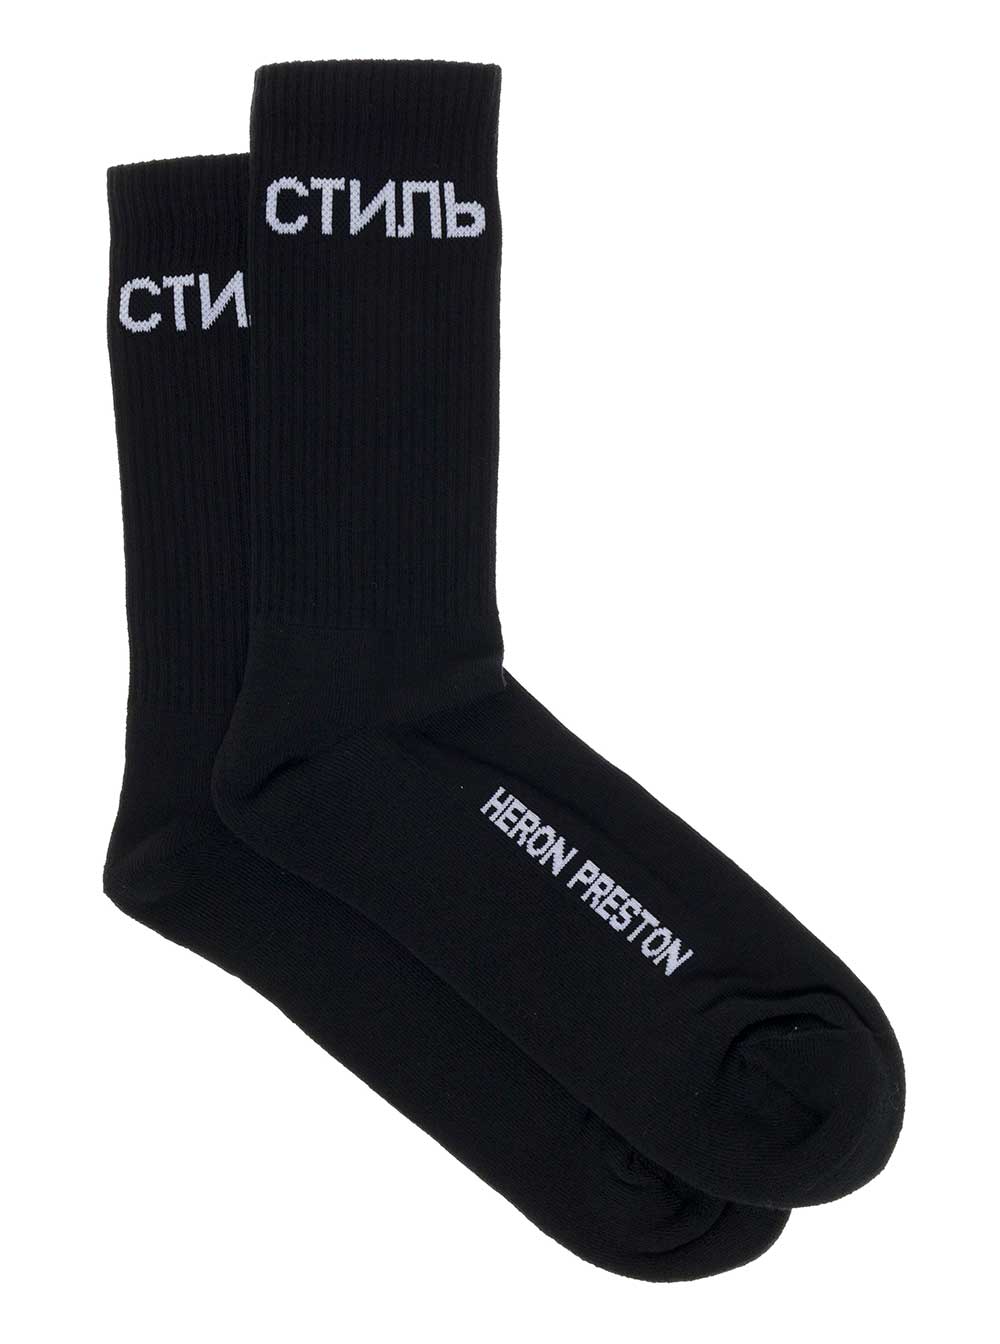 HERON PRESTON Black Cotton Socks With Ctnmb Print